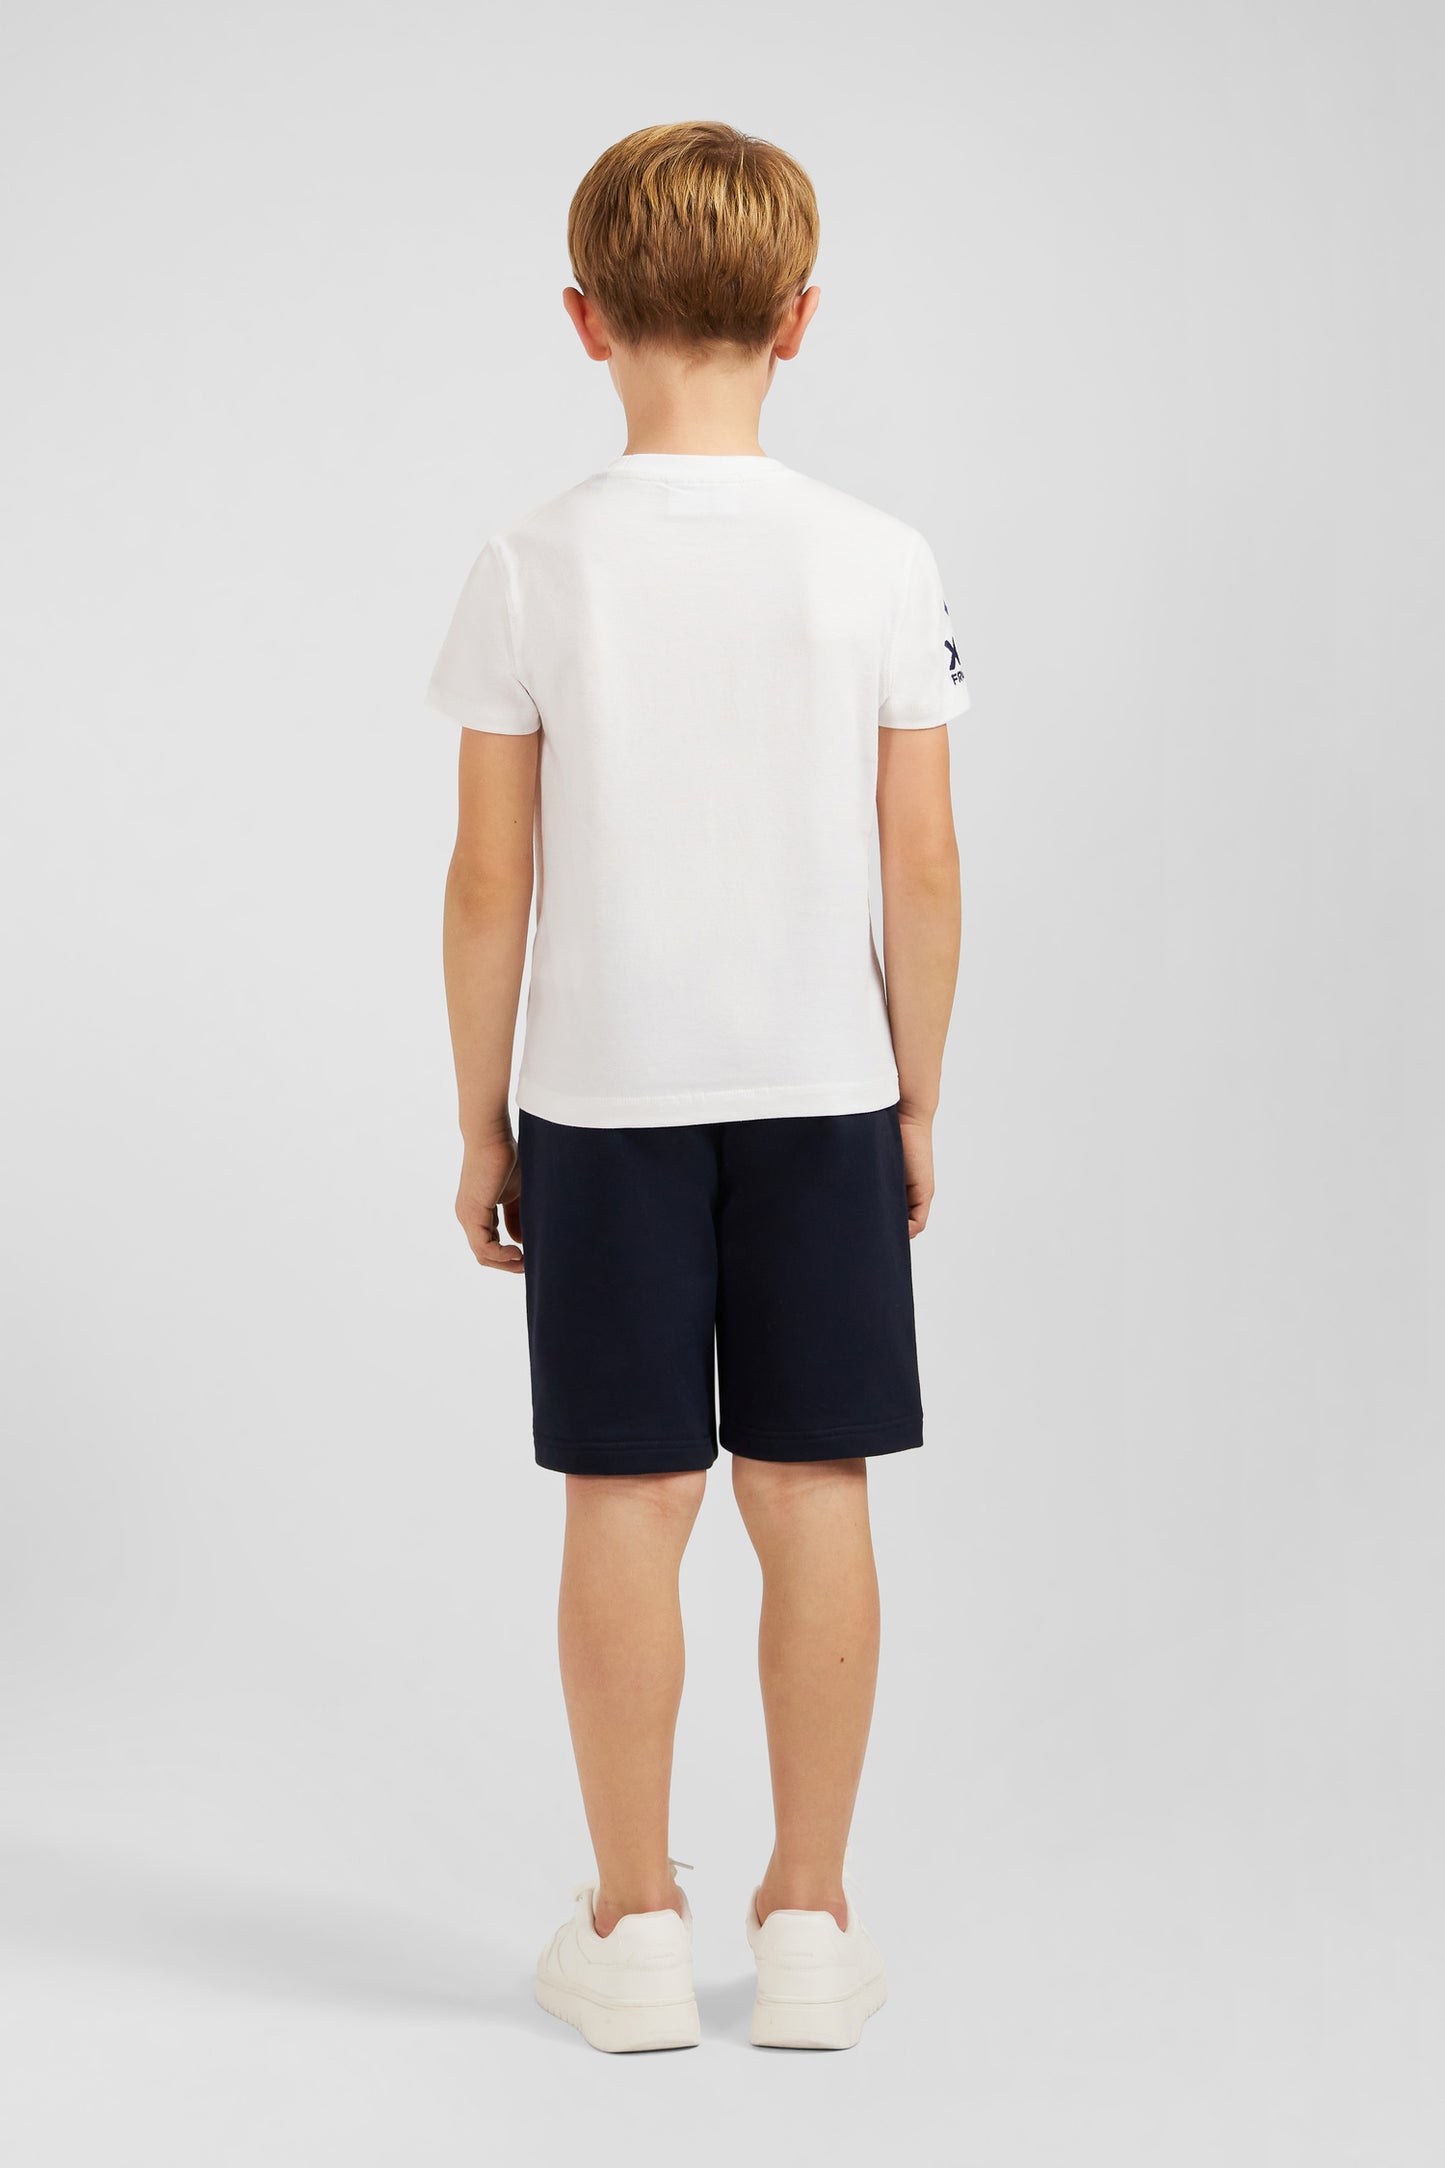 T-shirt blanc XV de France en jersey coton